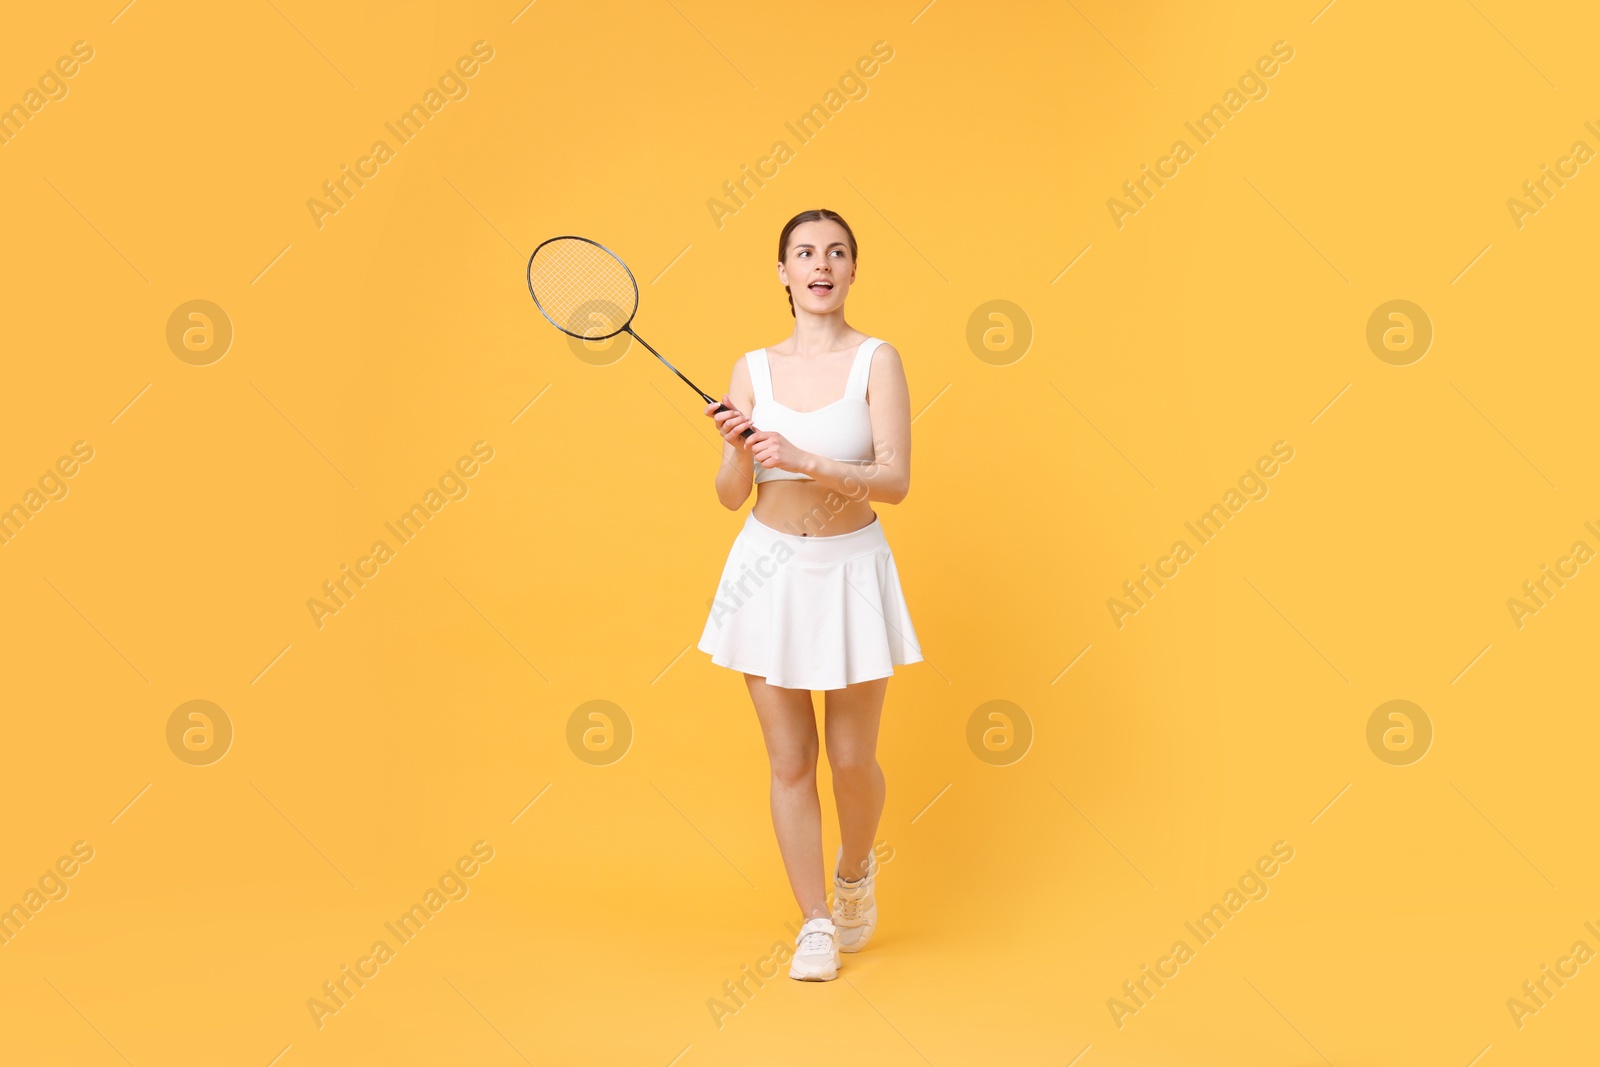 Photo of Young woman with badminton racket on orange background